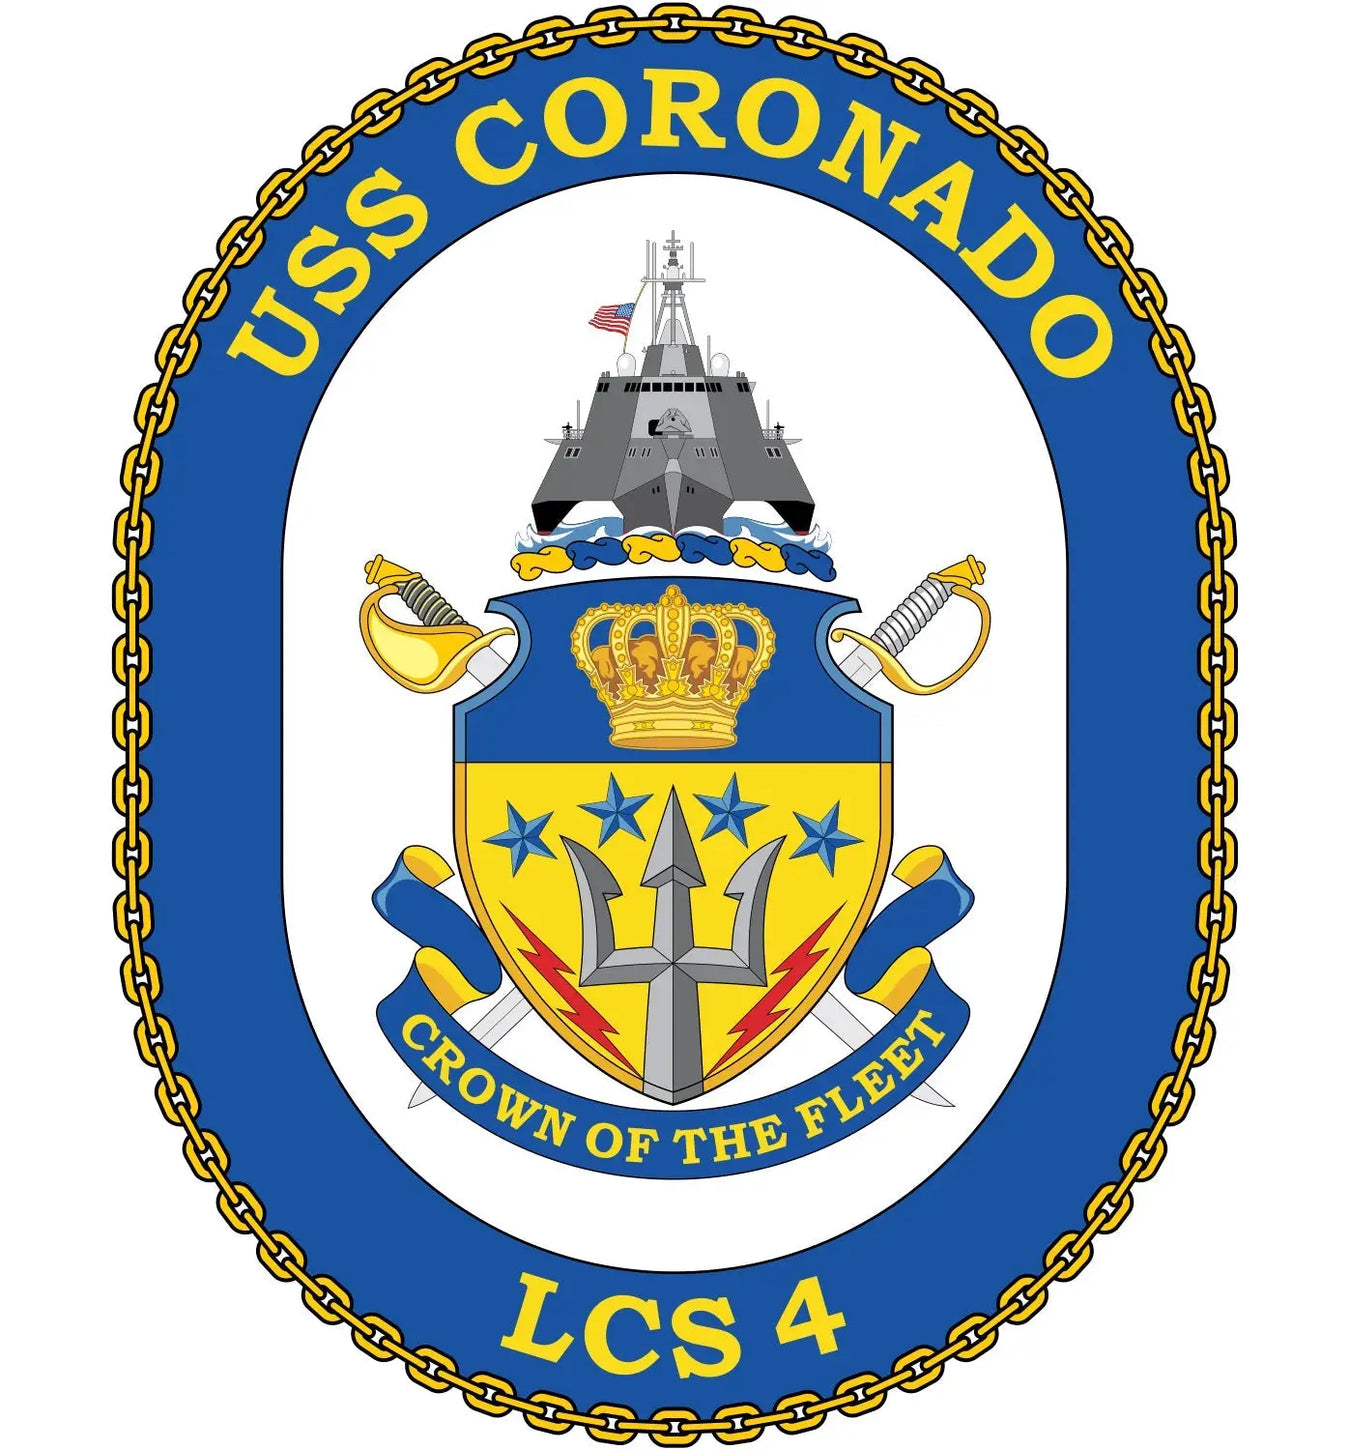 USS Coronado (LCS-4)